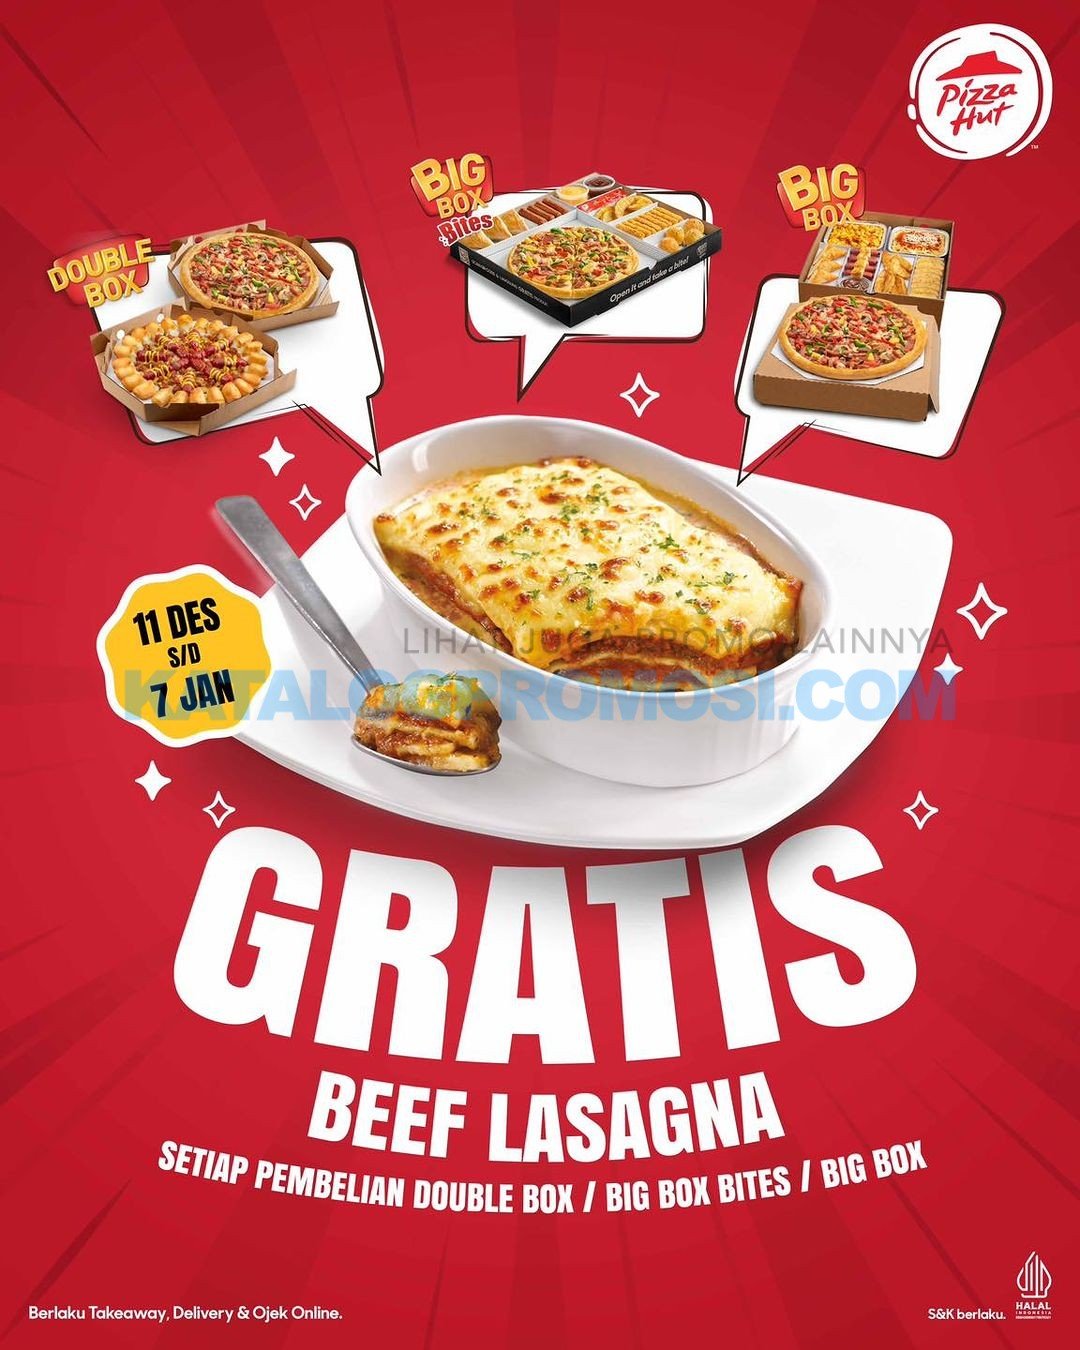 Promo PIZZA HUT GRATIS Beef Lasagna! 